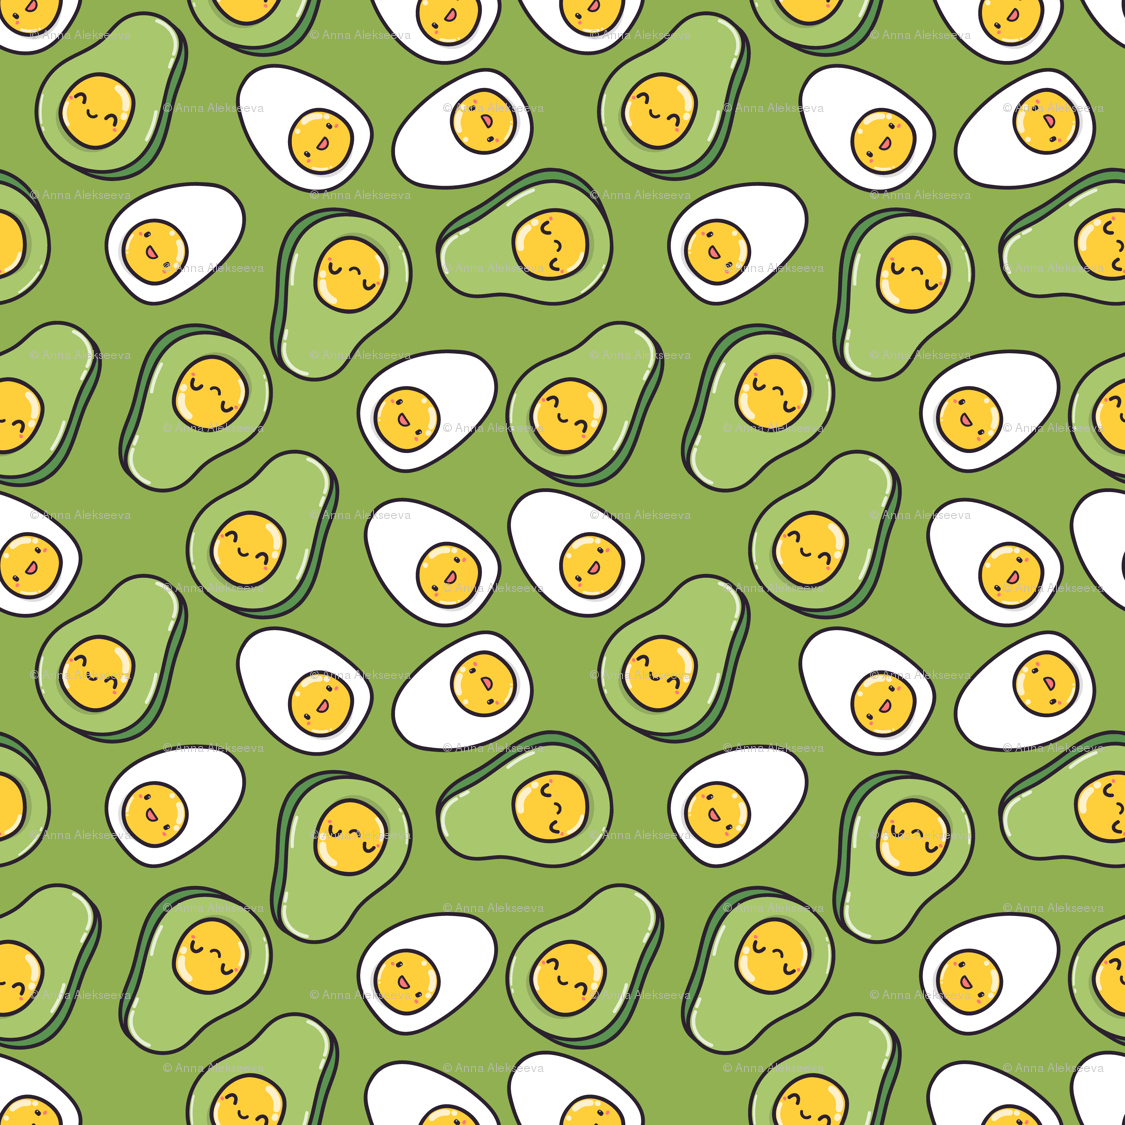 Cute egg and avocado wallpaper